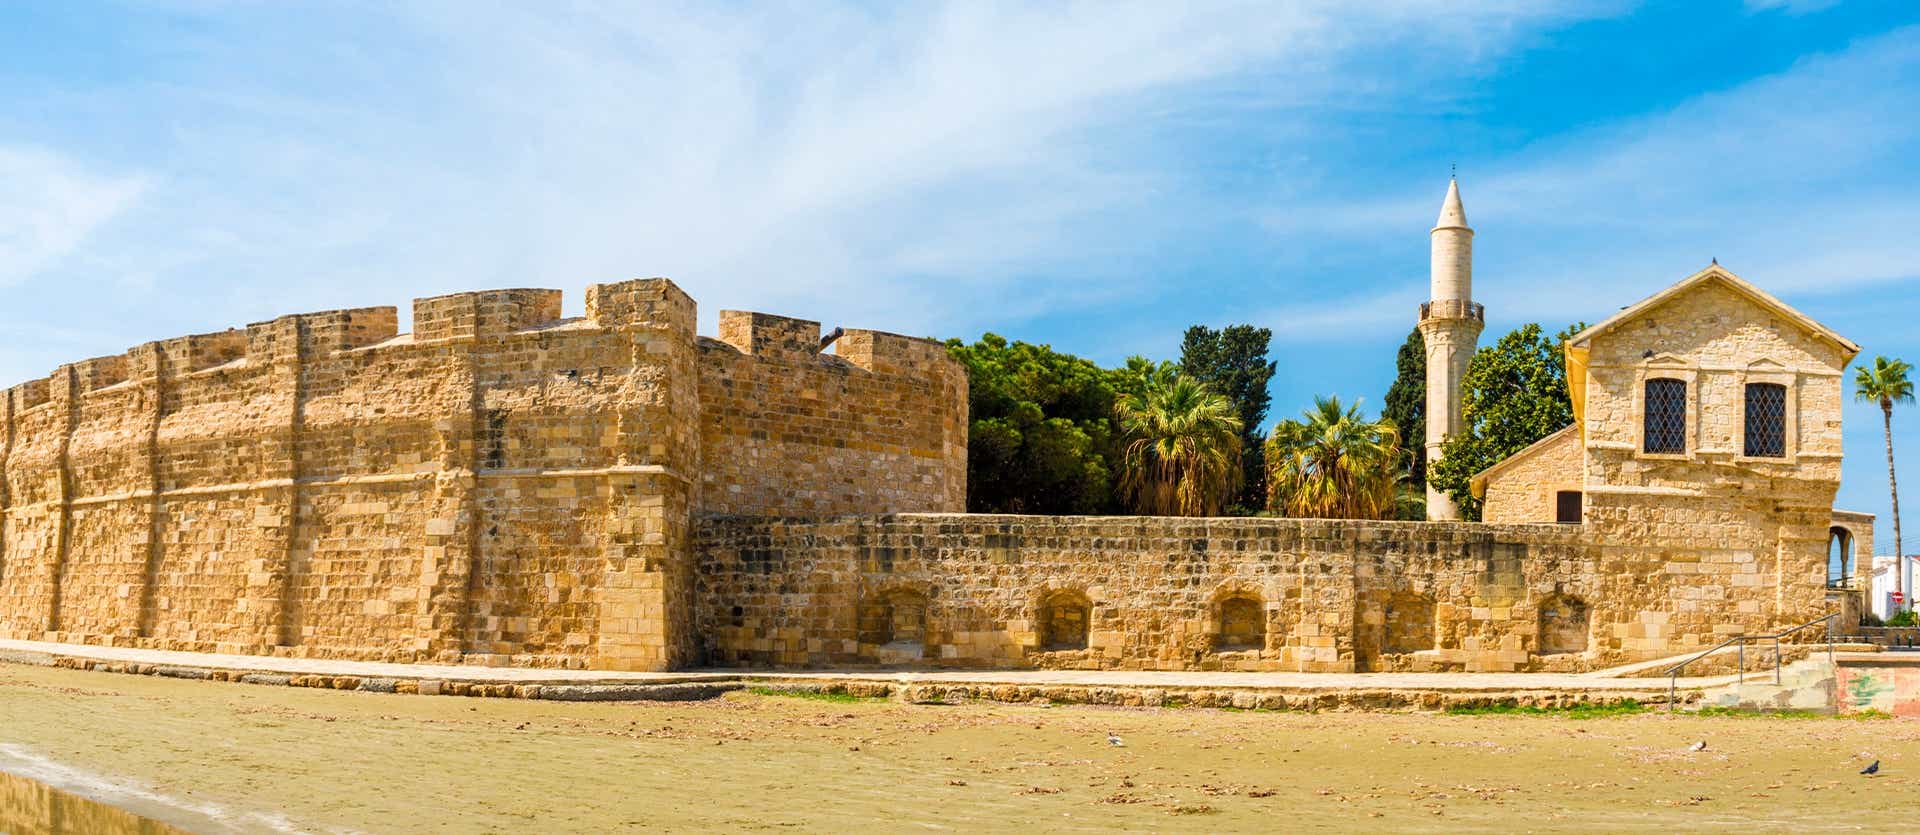 Medieval Fort <span class="iconos separador"></span> Larnaca